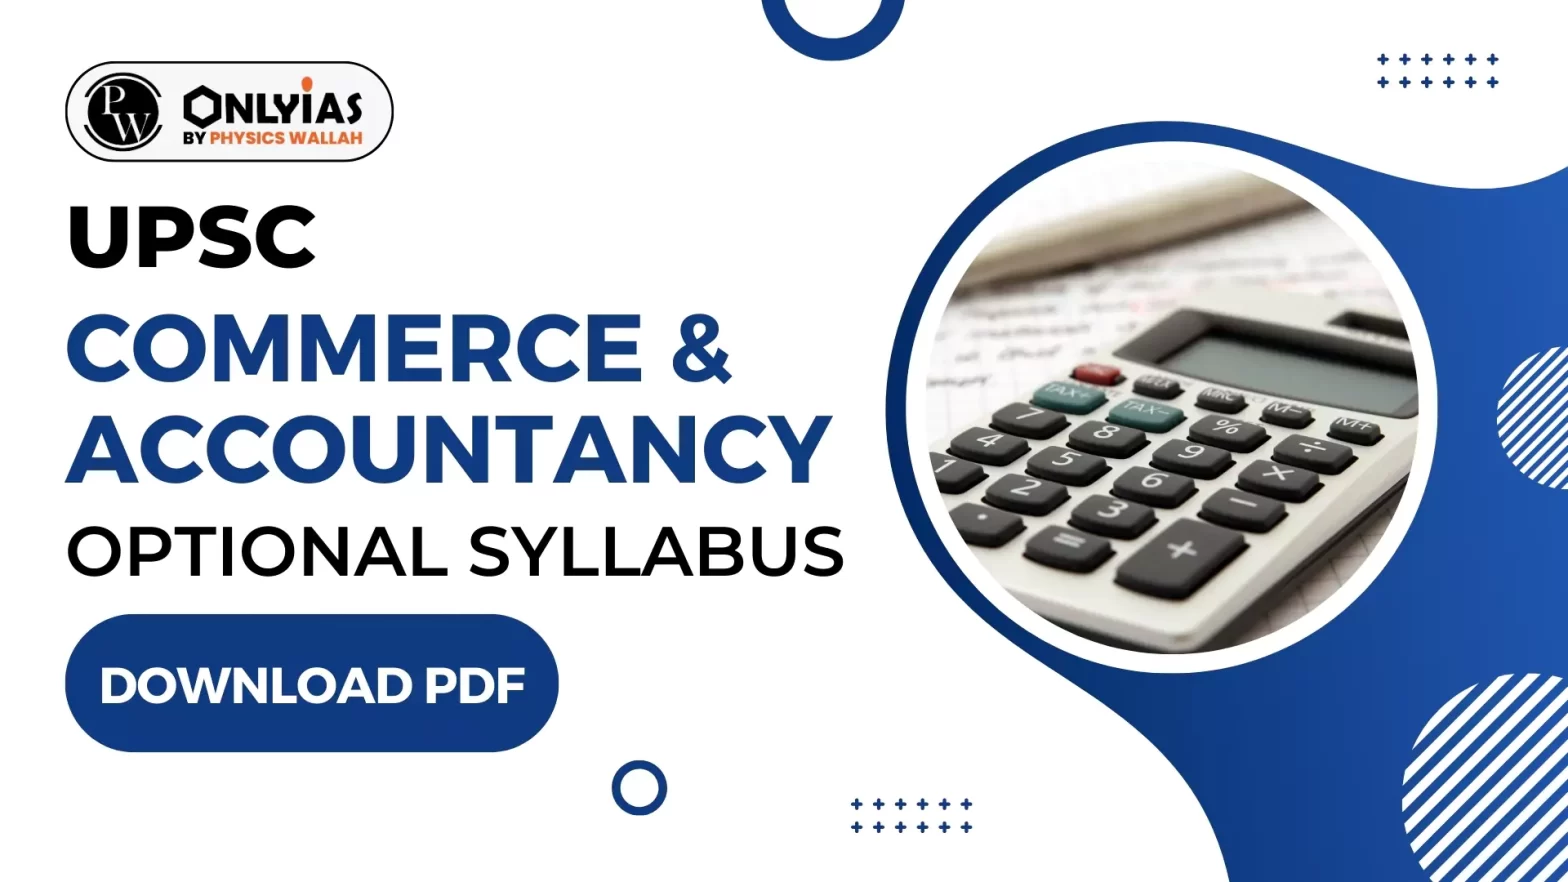 UPSC Commerce & Accountancy Optional Syllabus: Download PDF